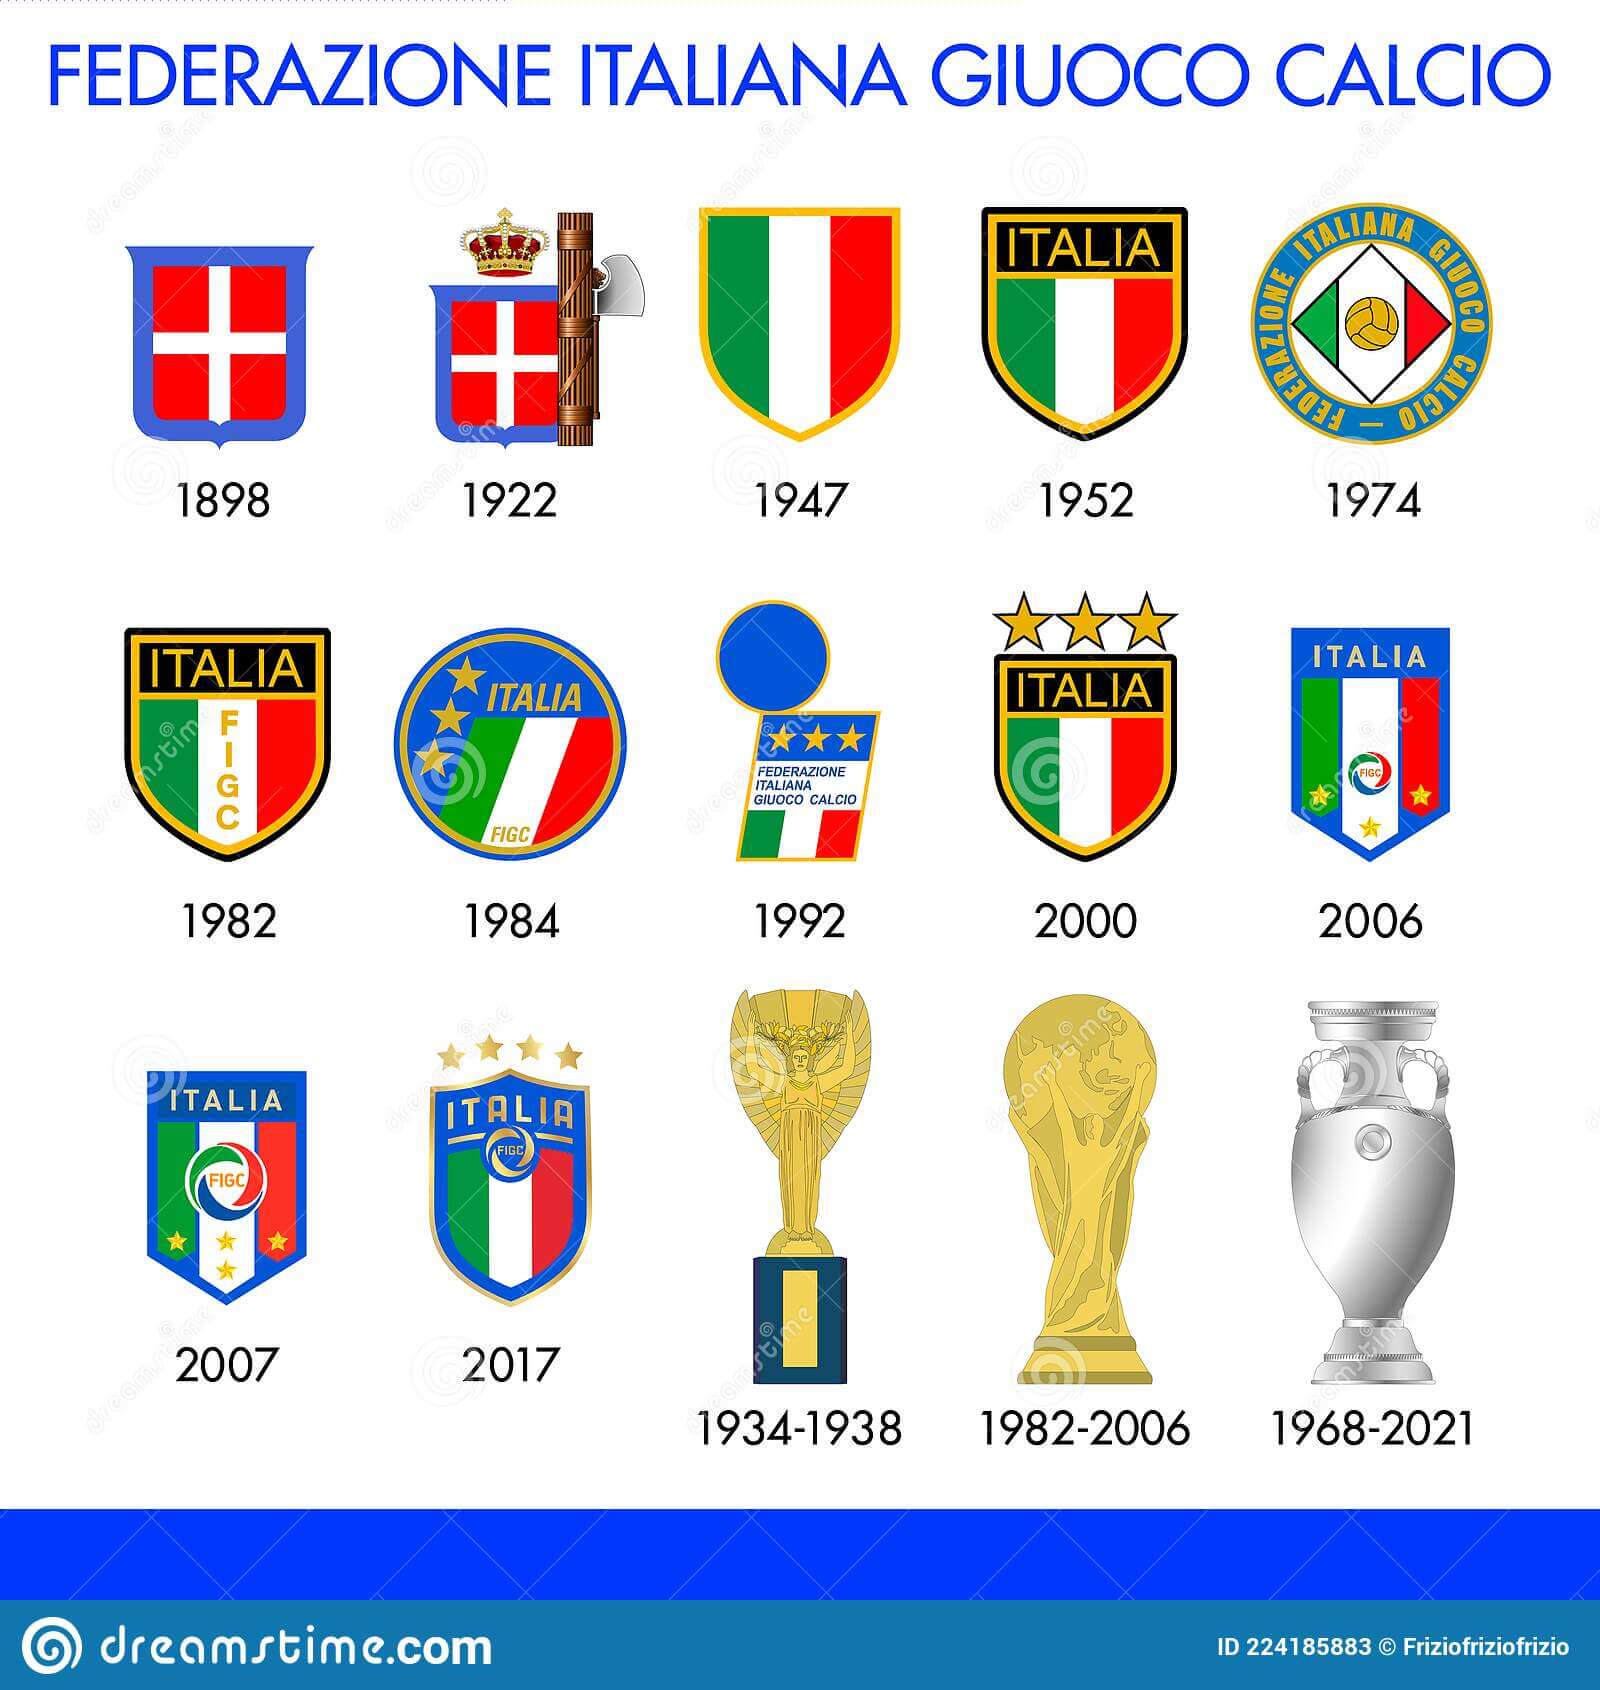 Glory of Italy team